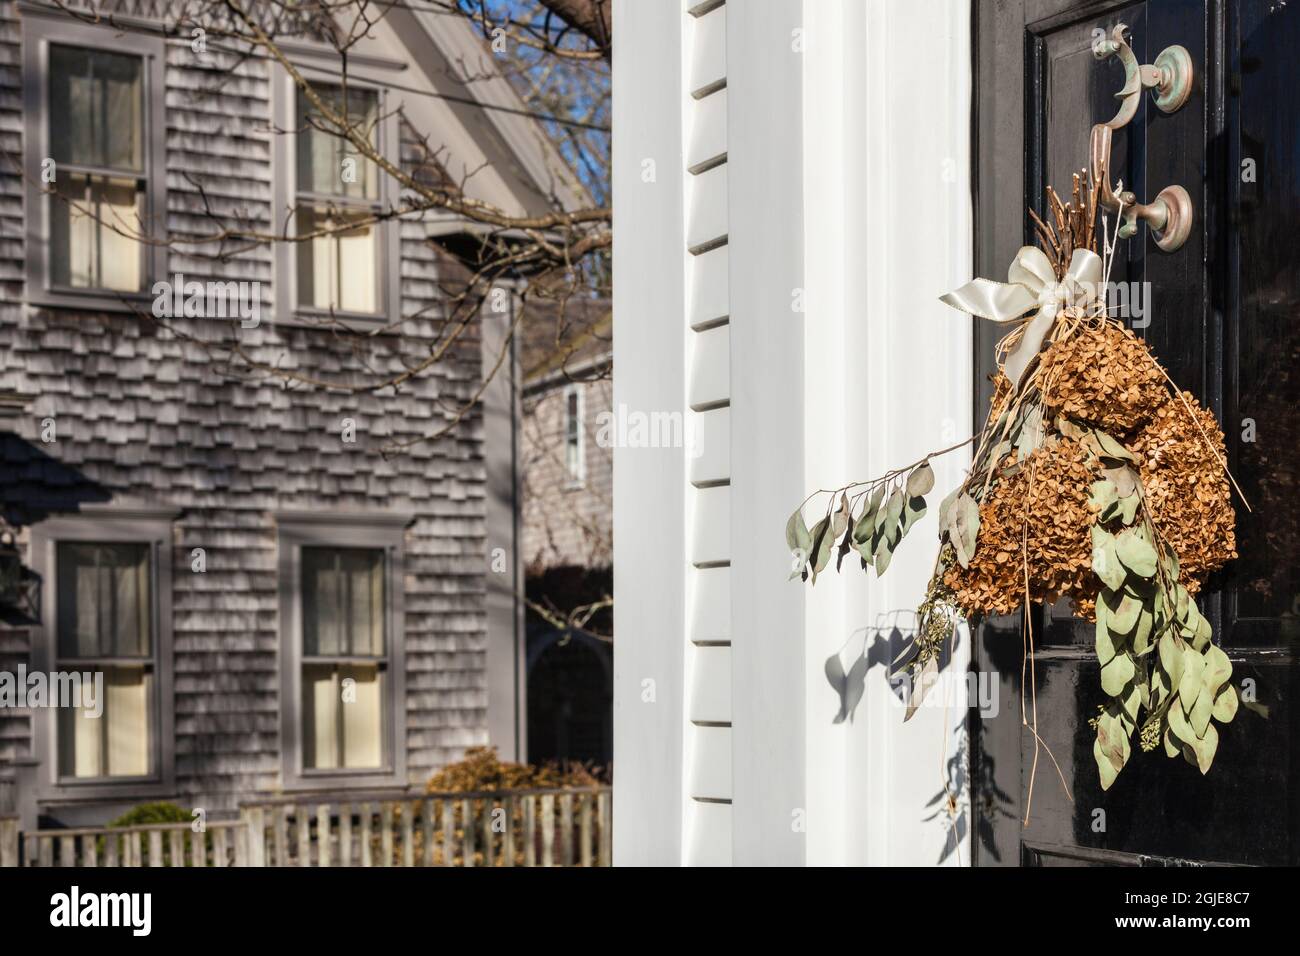 USA, Massachusetts, Nantucket Island. Nantucket Town, door wreath decoration. Stock Photo